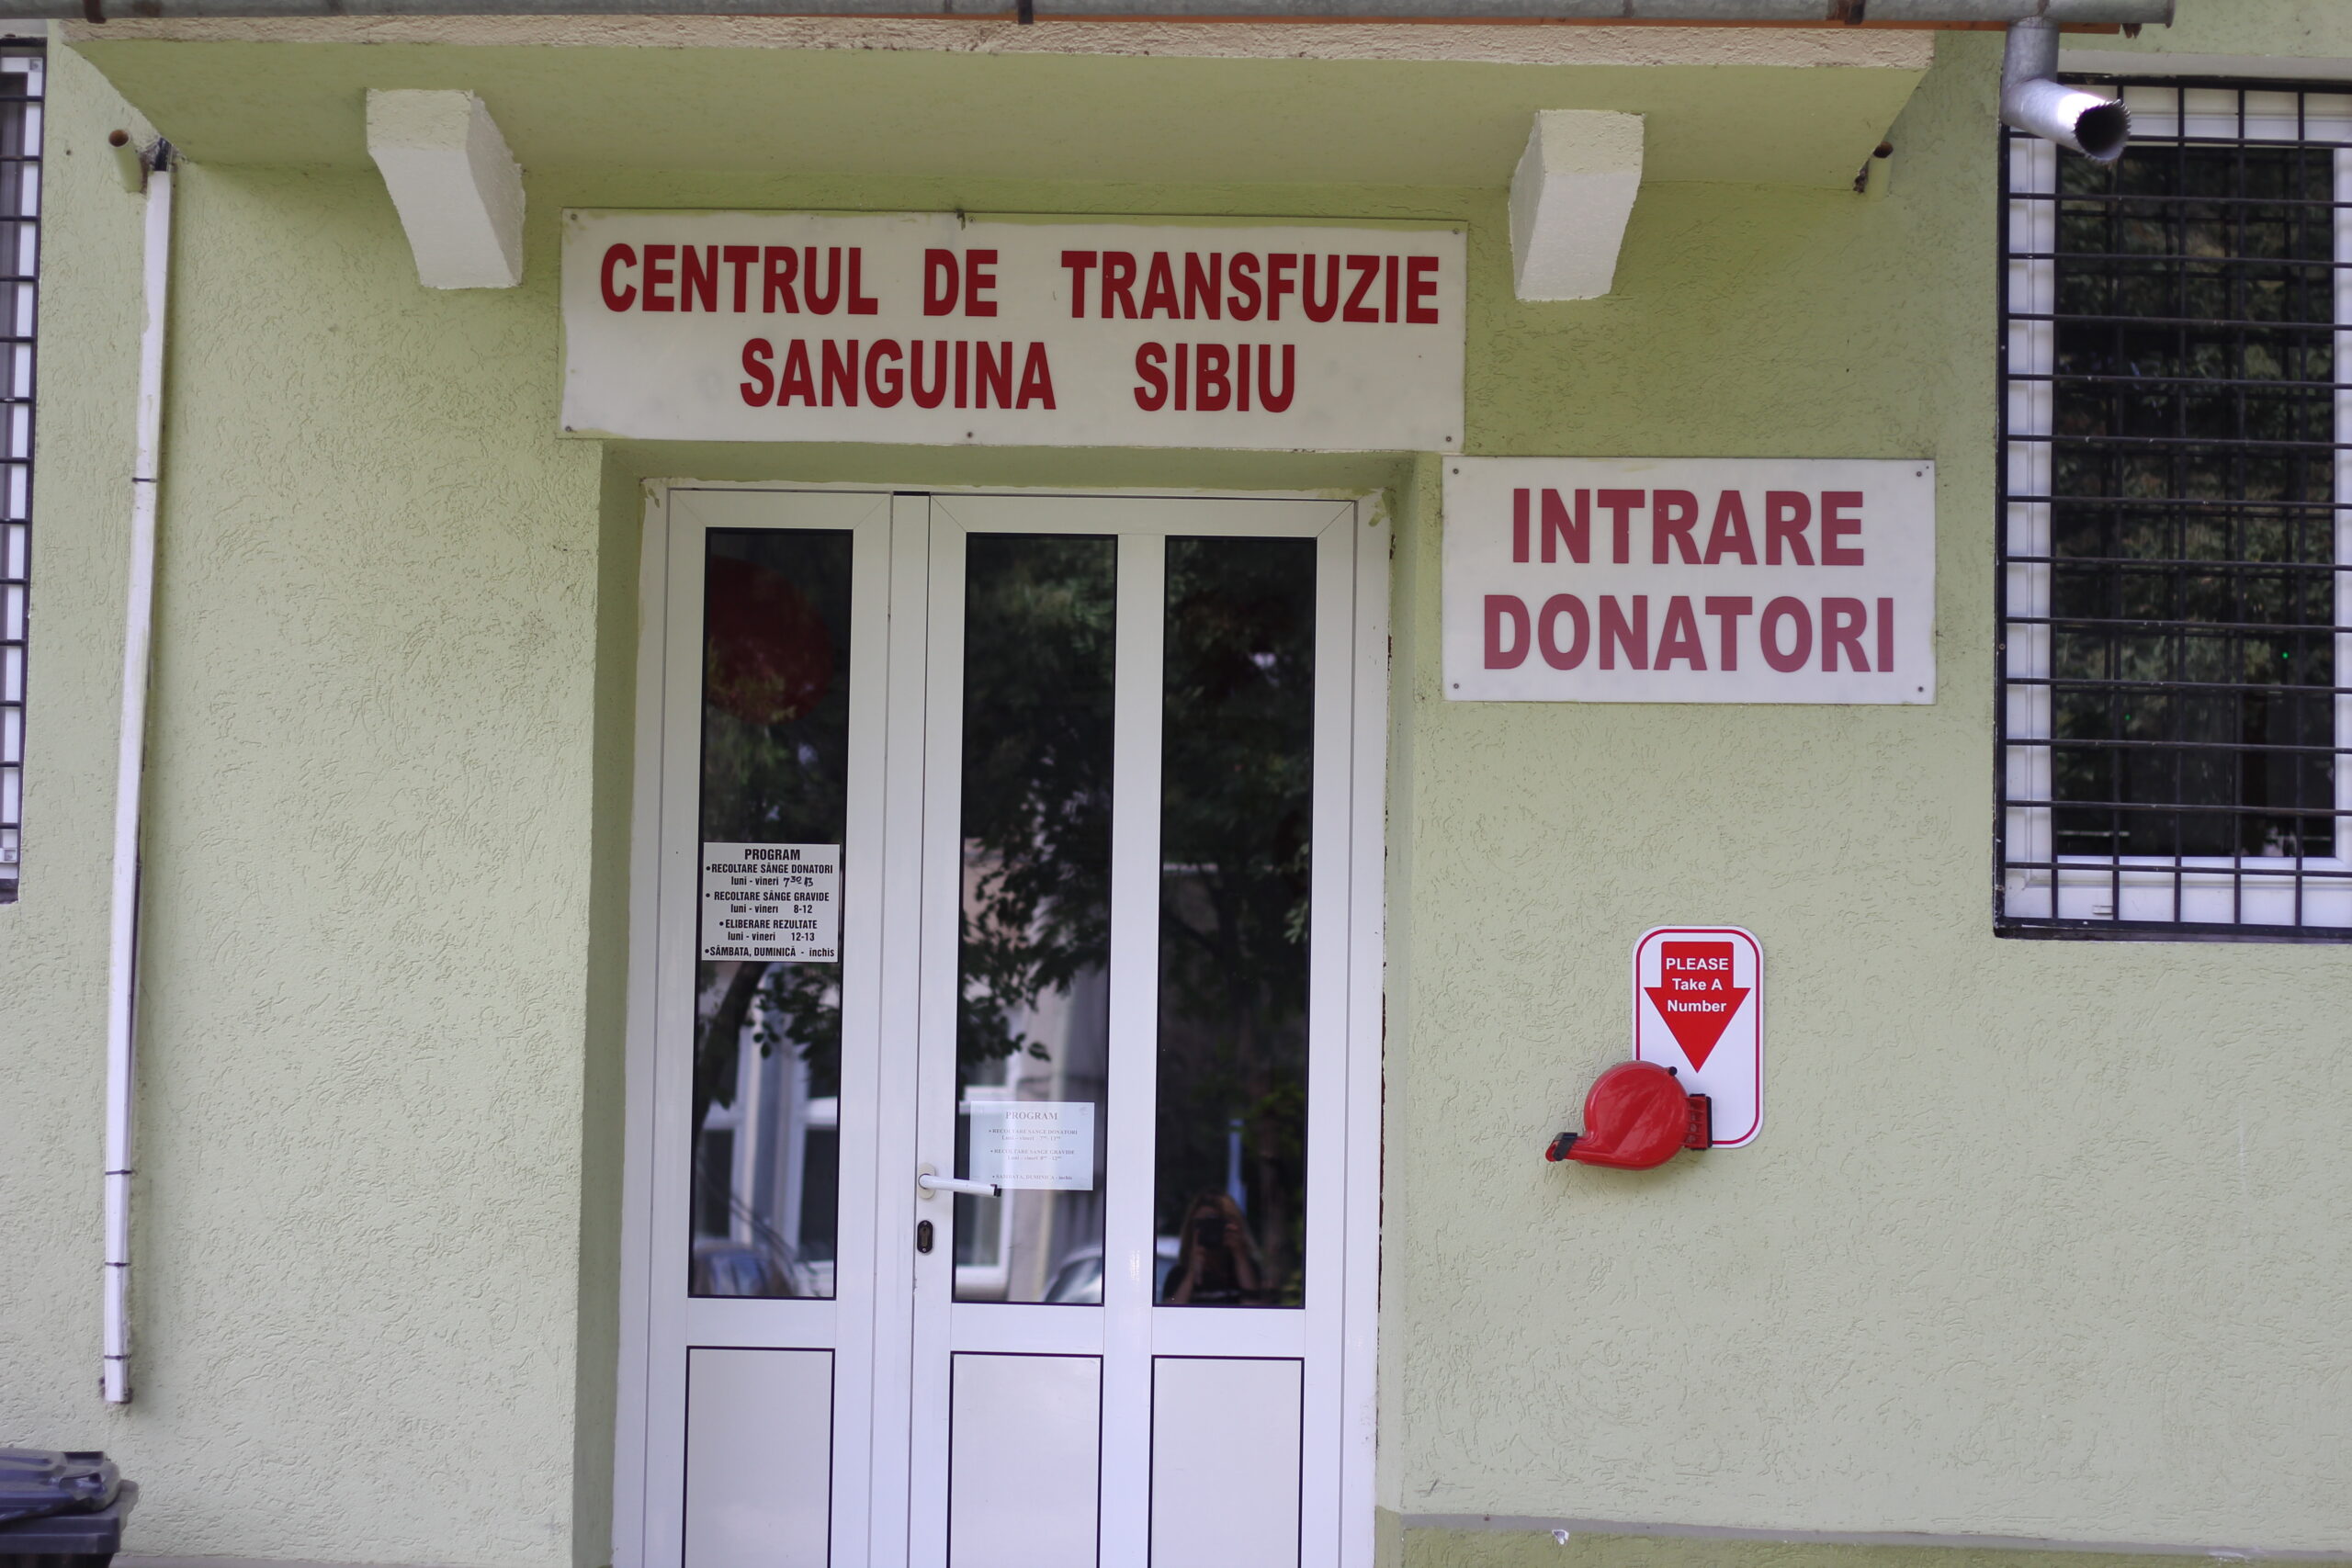 Centrul de Transfuzie Sanguina Sibiu